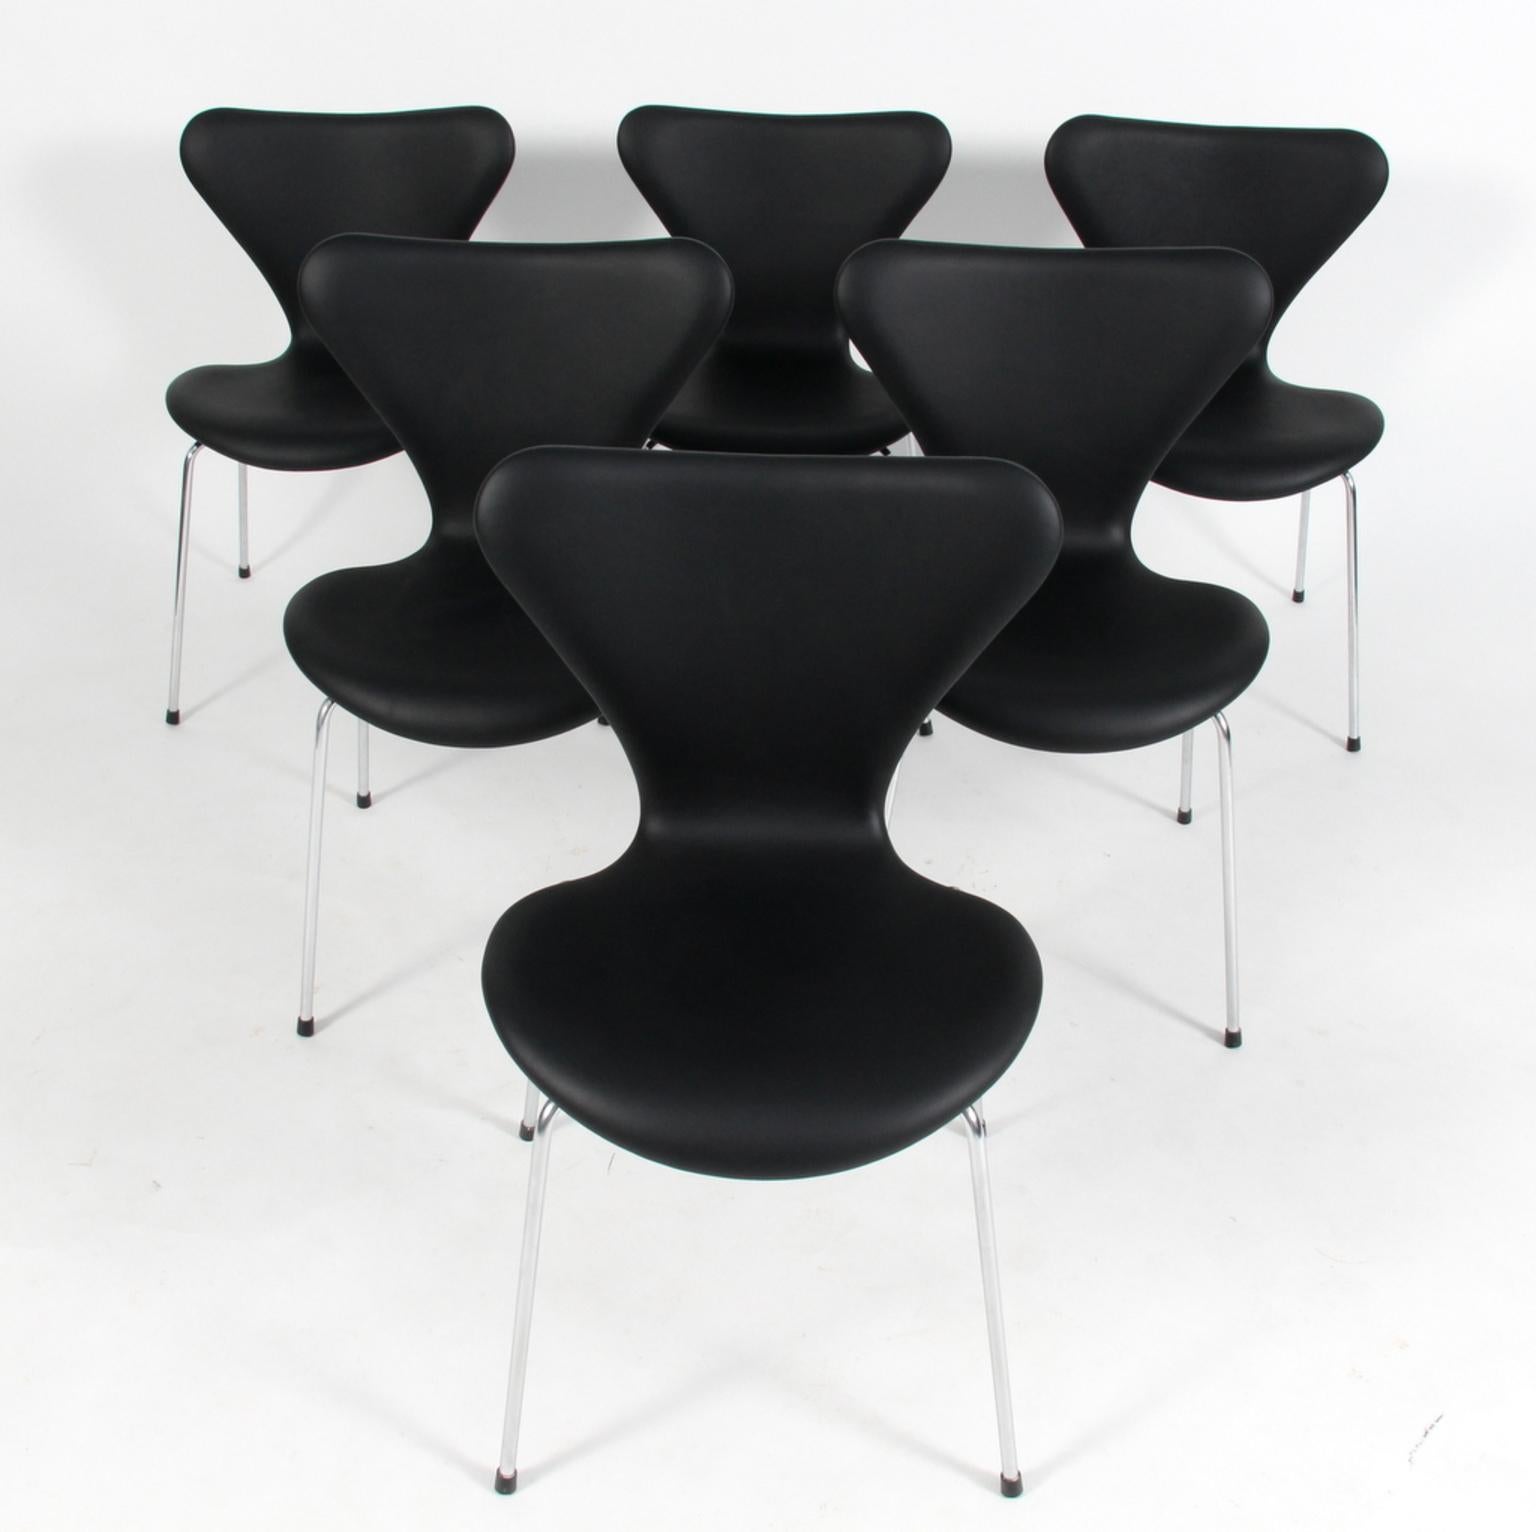 Arne Jacobsen dining chair new upholstered with black aniline leather.

Base of chrome steel tube.

Model 3107 Syveren, made by Fritz Hansen.